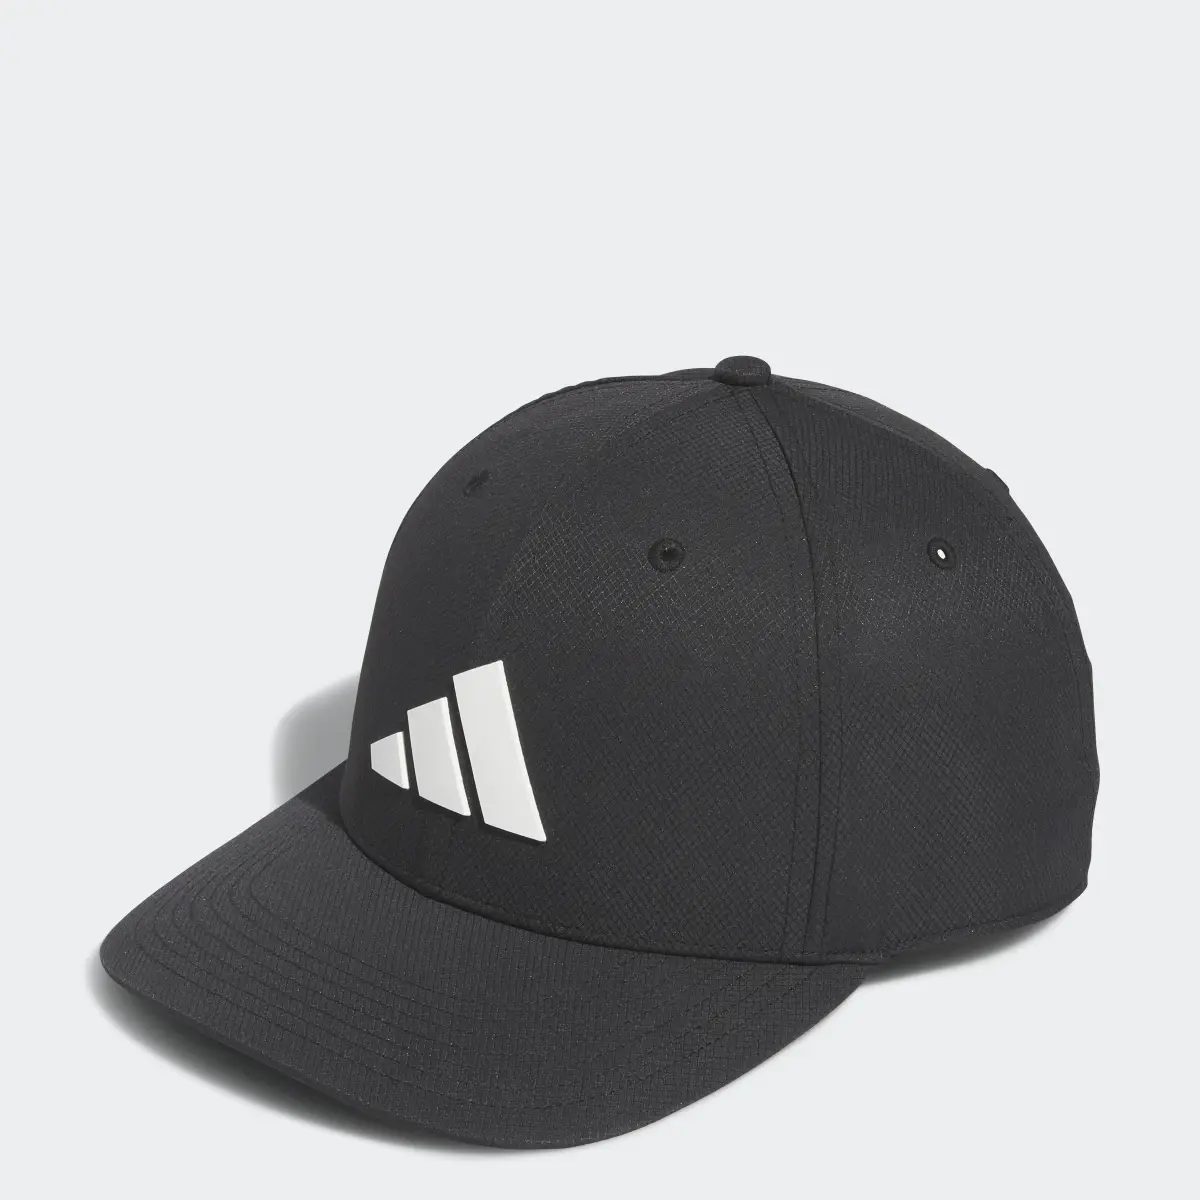 Adidas Tour Snapback Golf Hat. 1